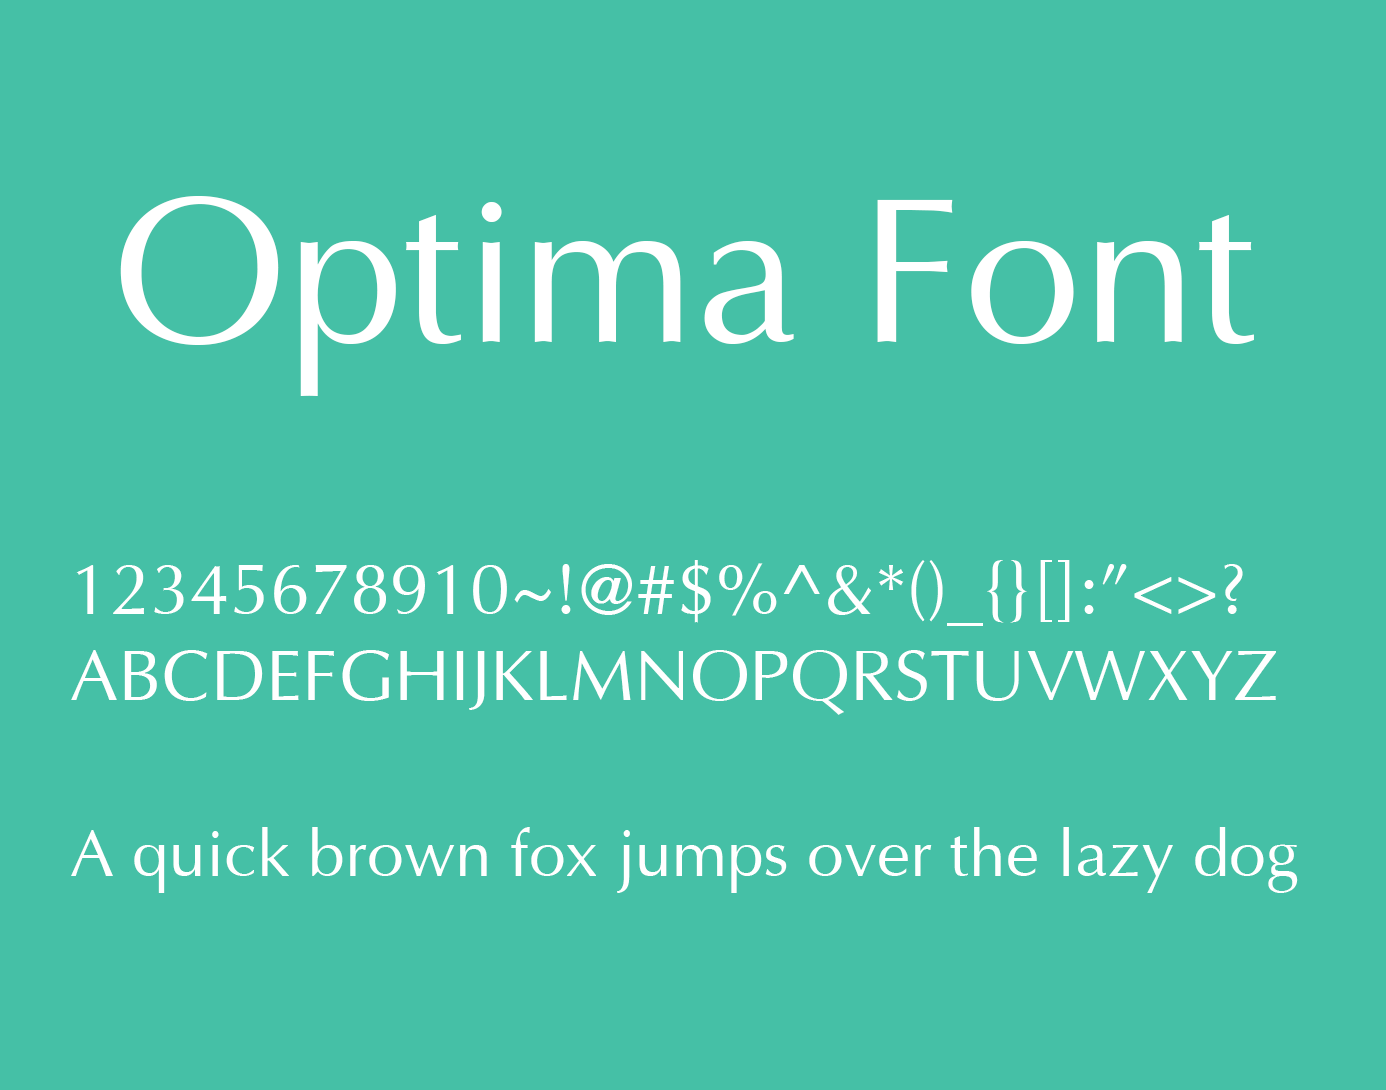 Optima Bold Font Free Download Mac